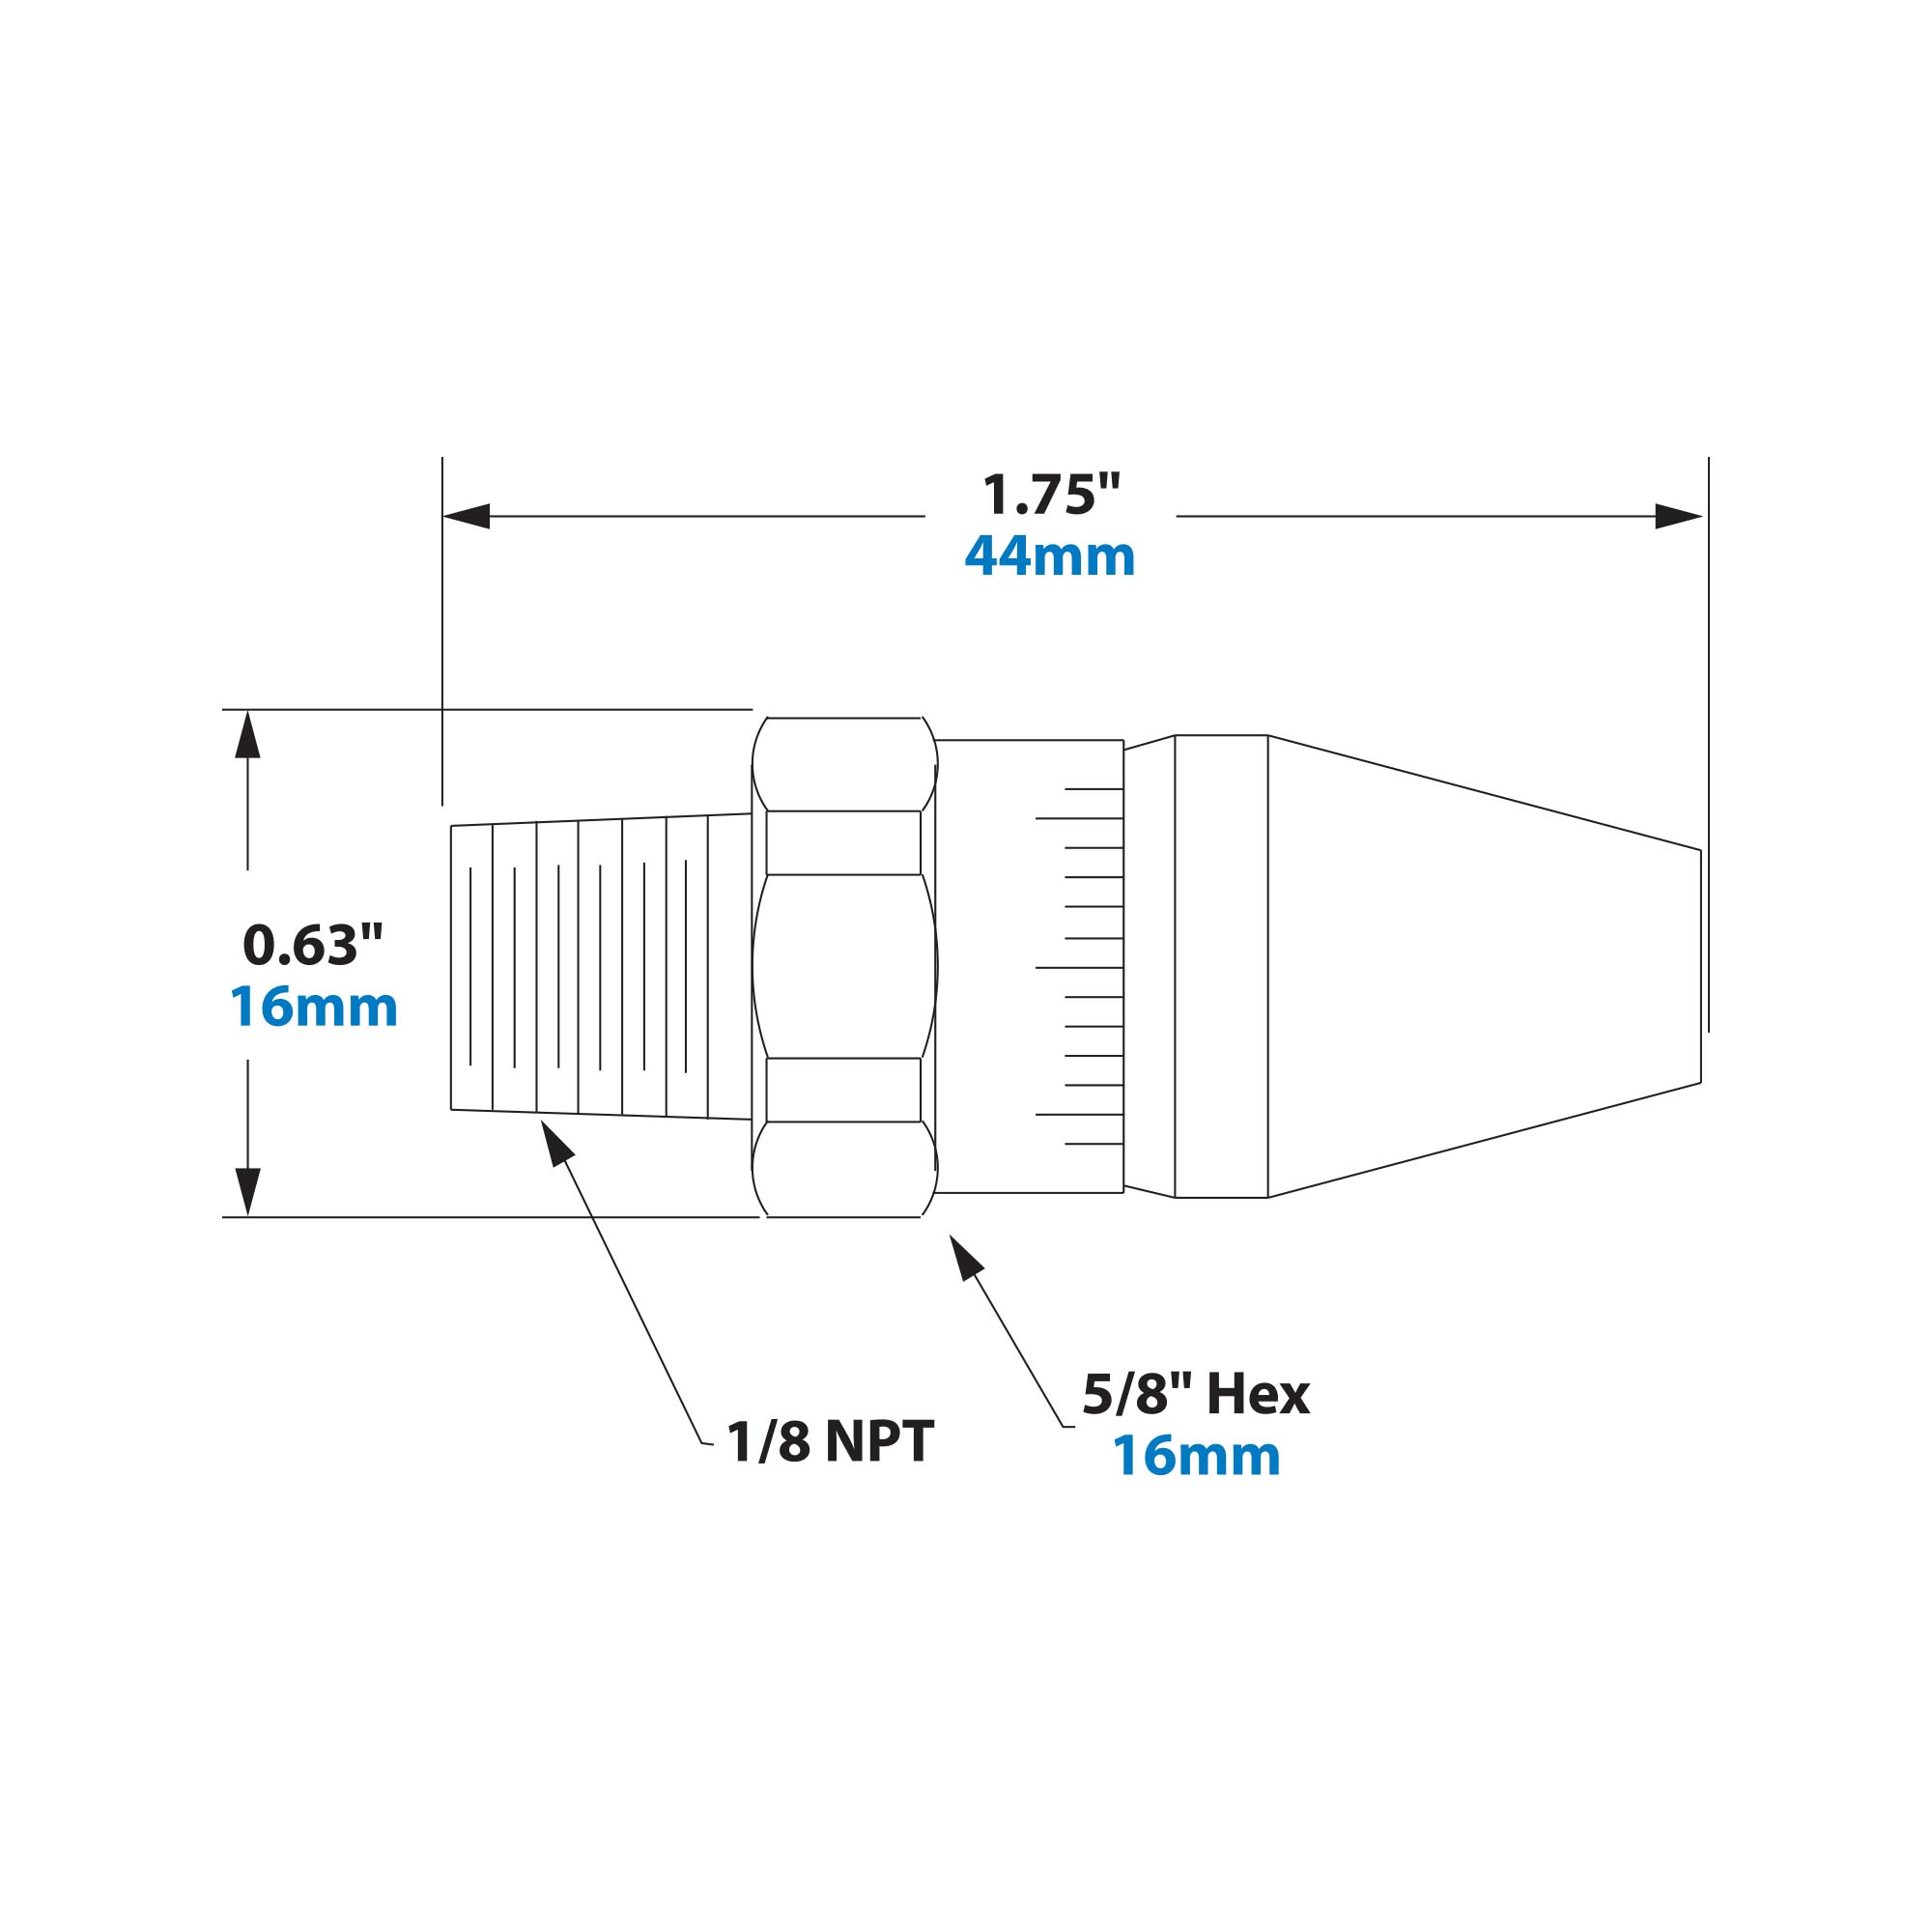 EXAIR Adjustable Air Nozzle Dimensions